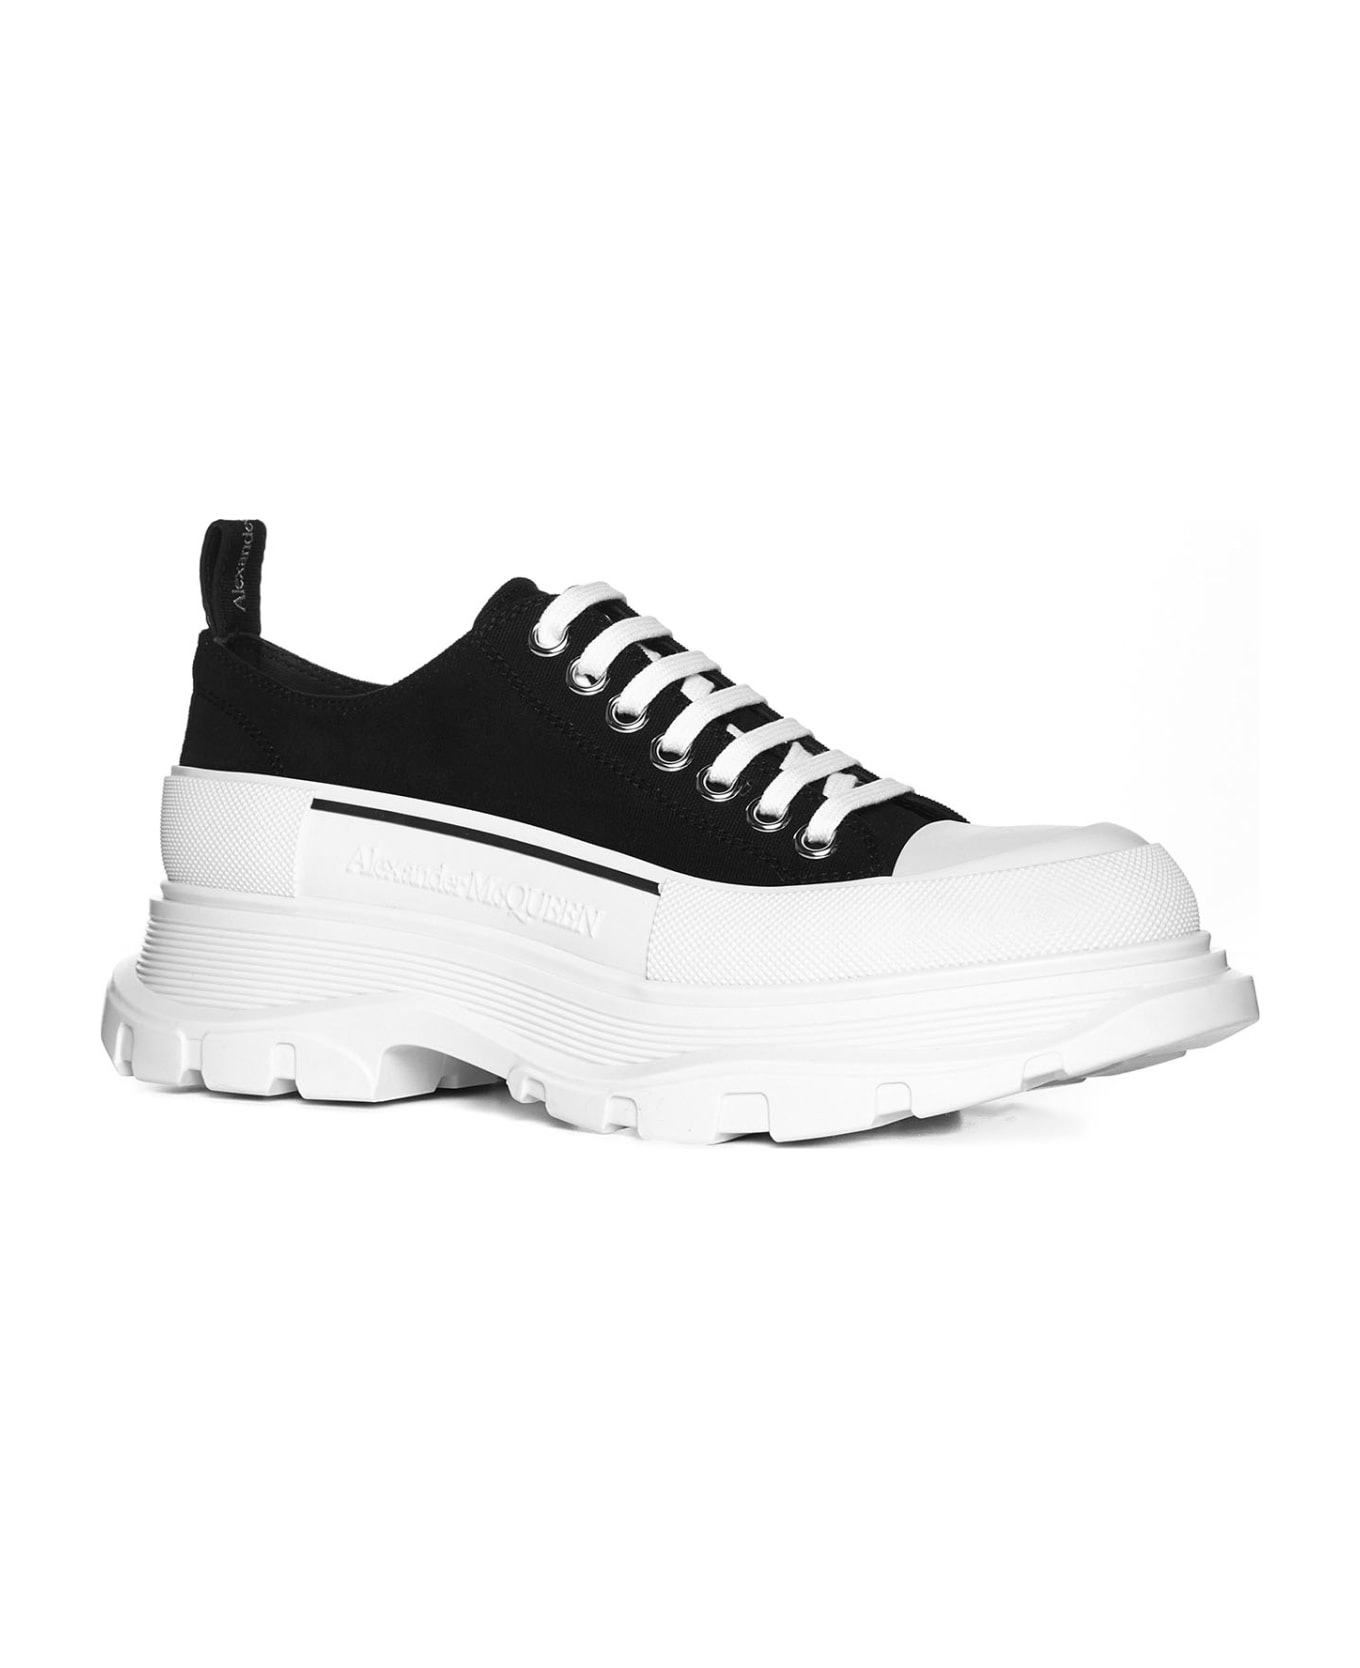 Alexander McQueen Tread Slick Sneakers - Black/white